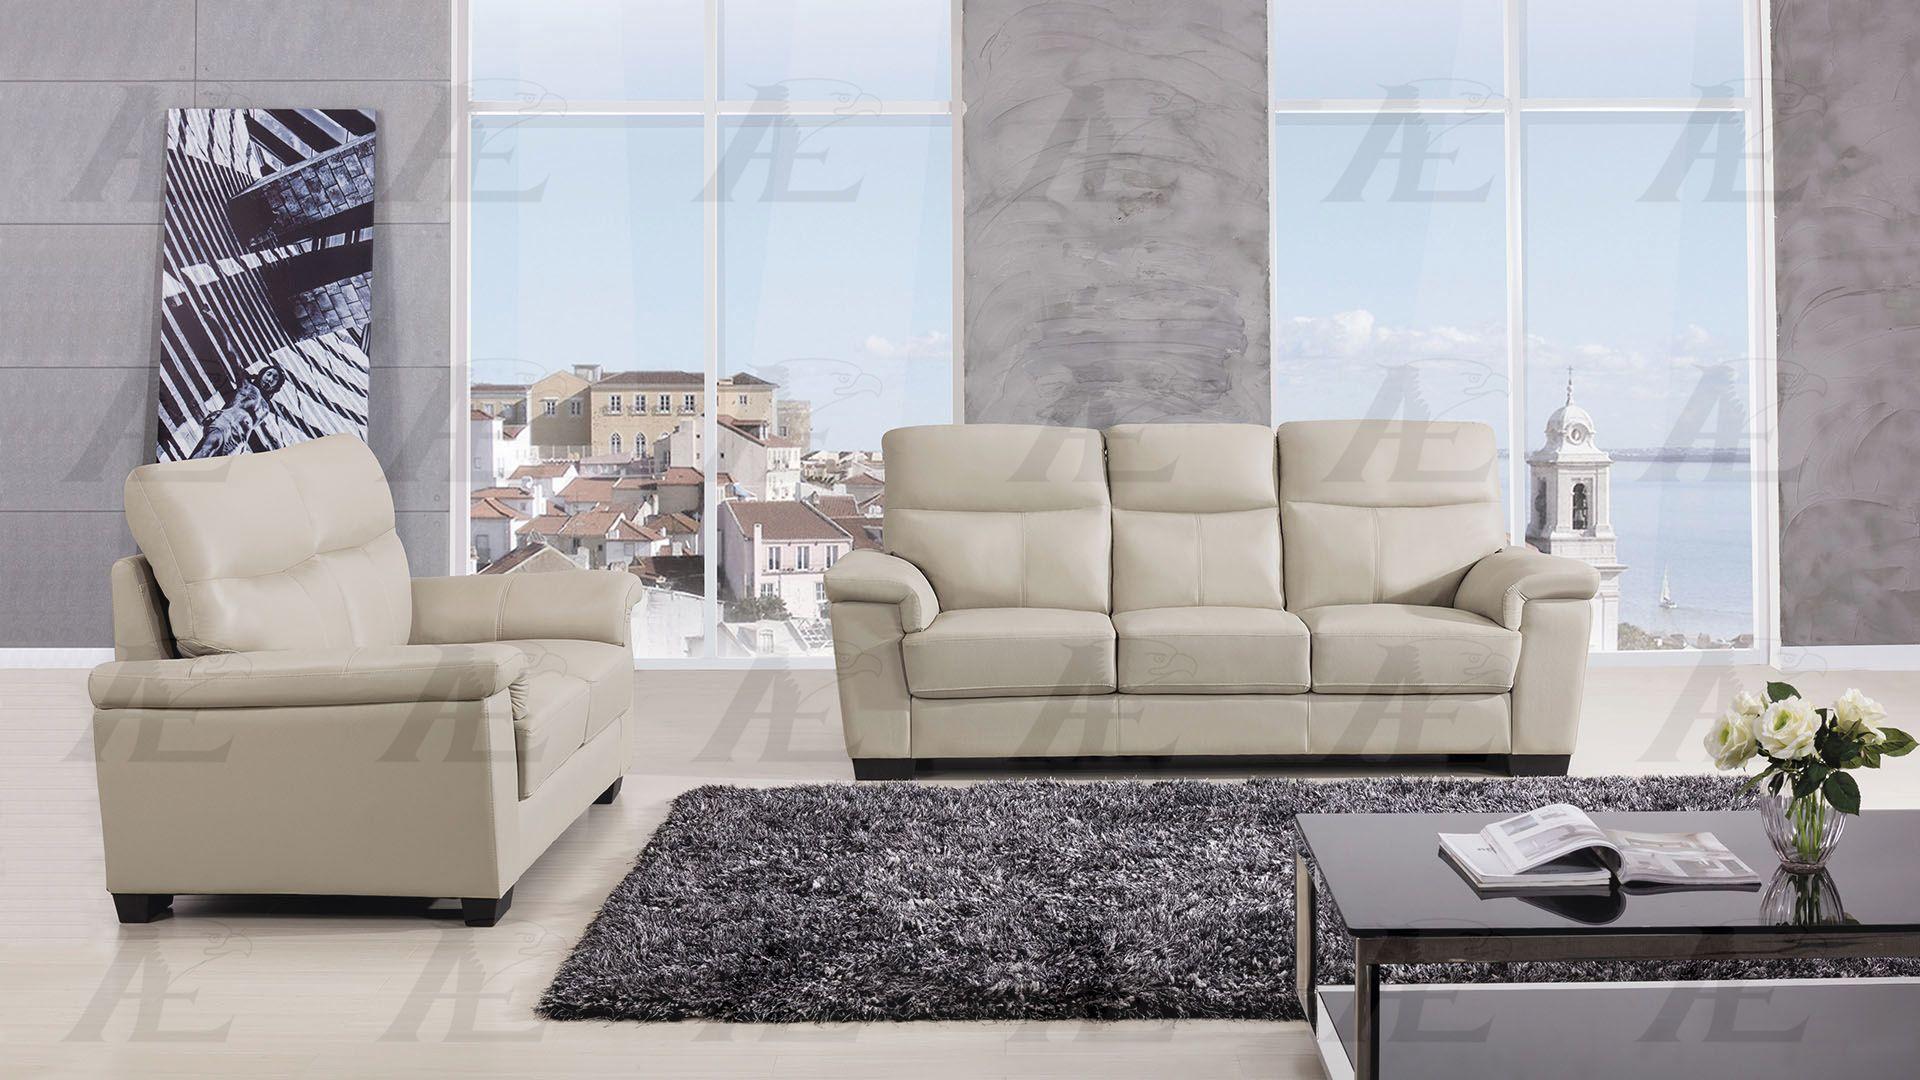 

    
American Eagle EK515 Light Gray Genuine Leather Living Room Sofa Set 2pcs in Contemporary Style
